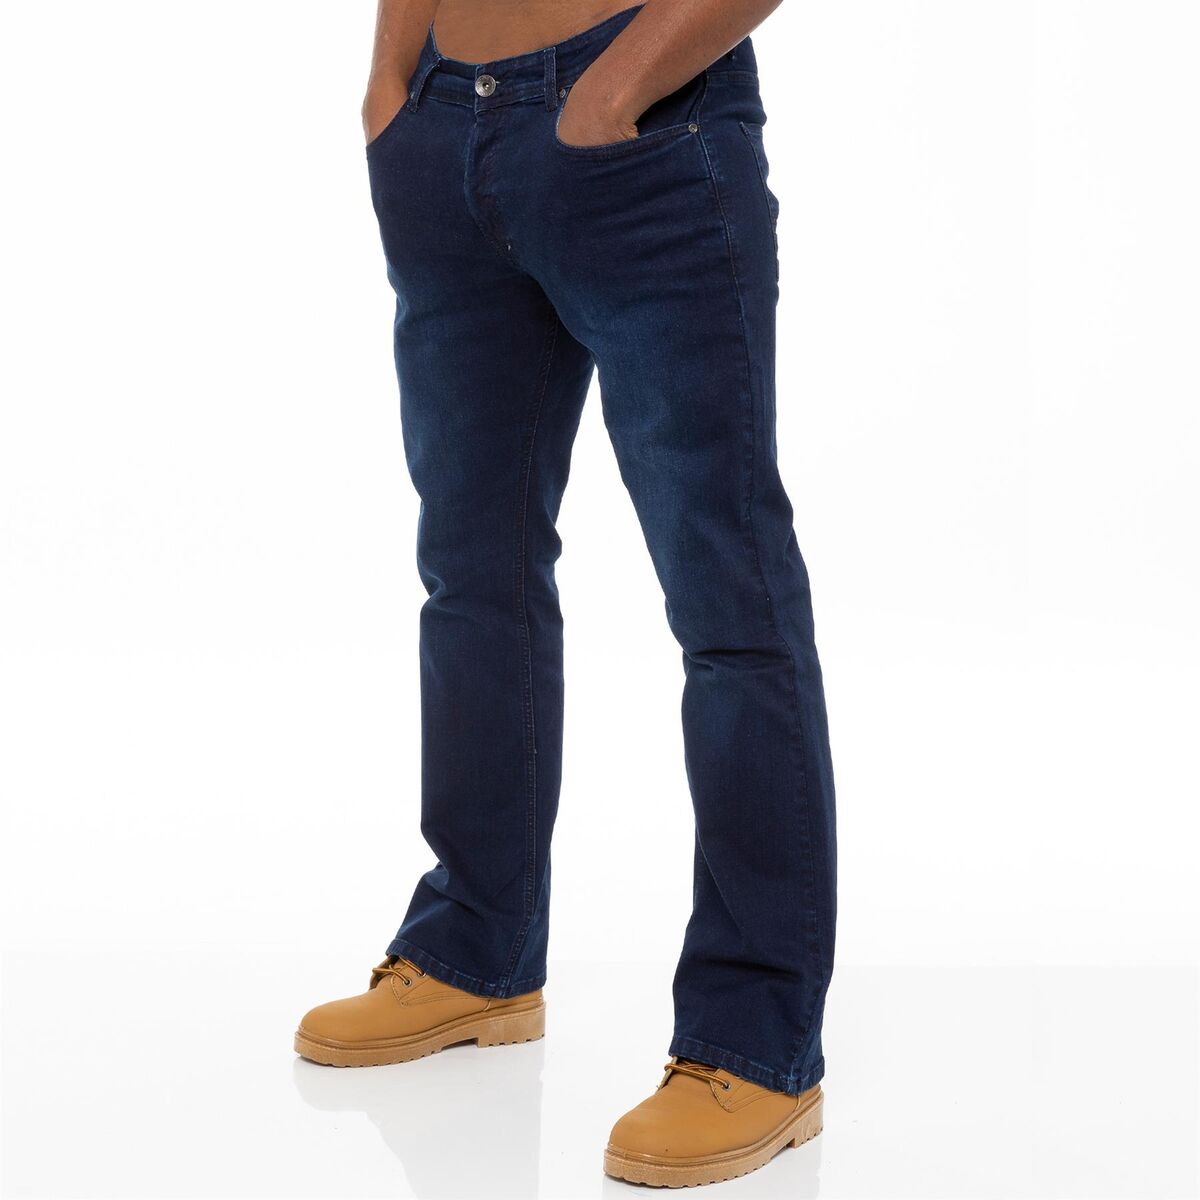 Enzo Bootcut Jeans eBay Flared Pants Sizes Denim Trouser All UK Leg Stretch Wide Mens 